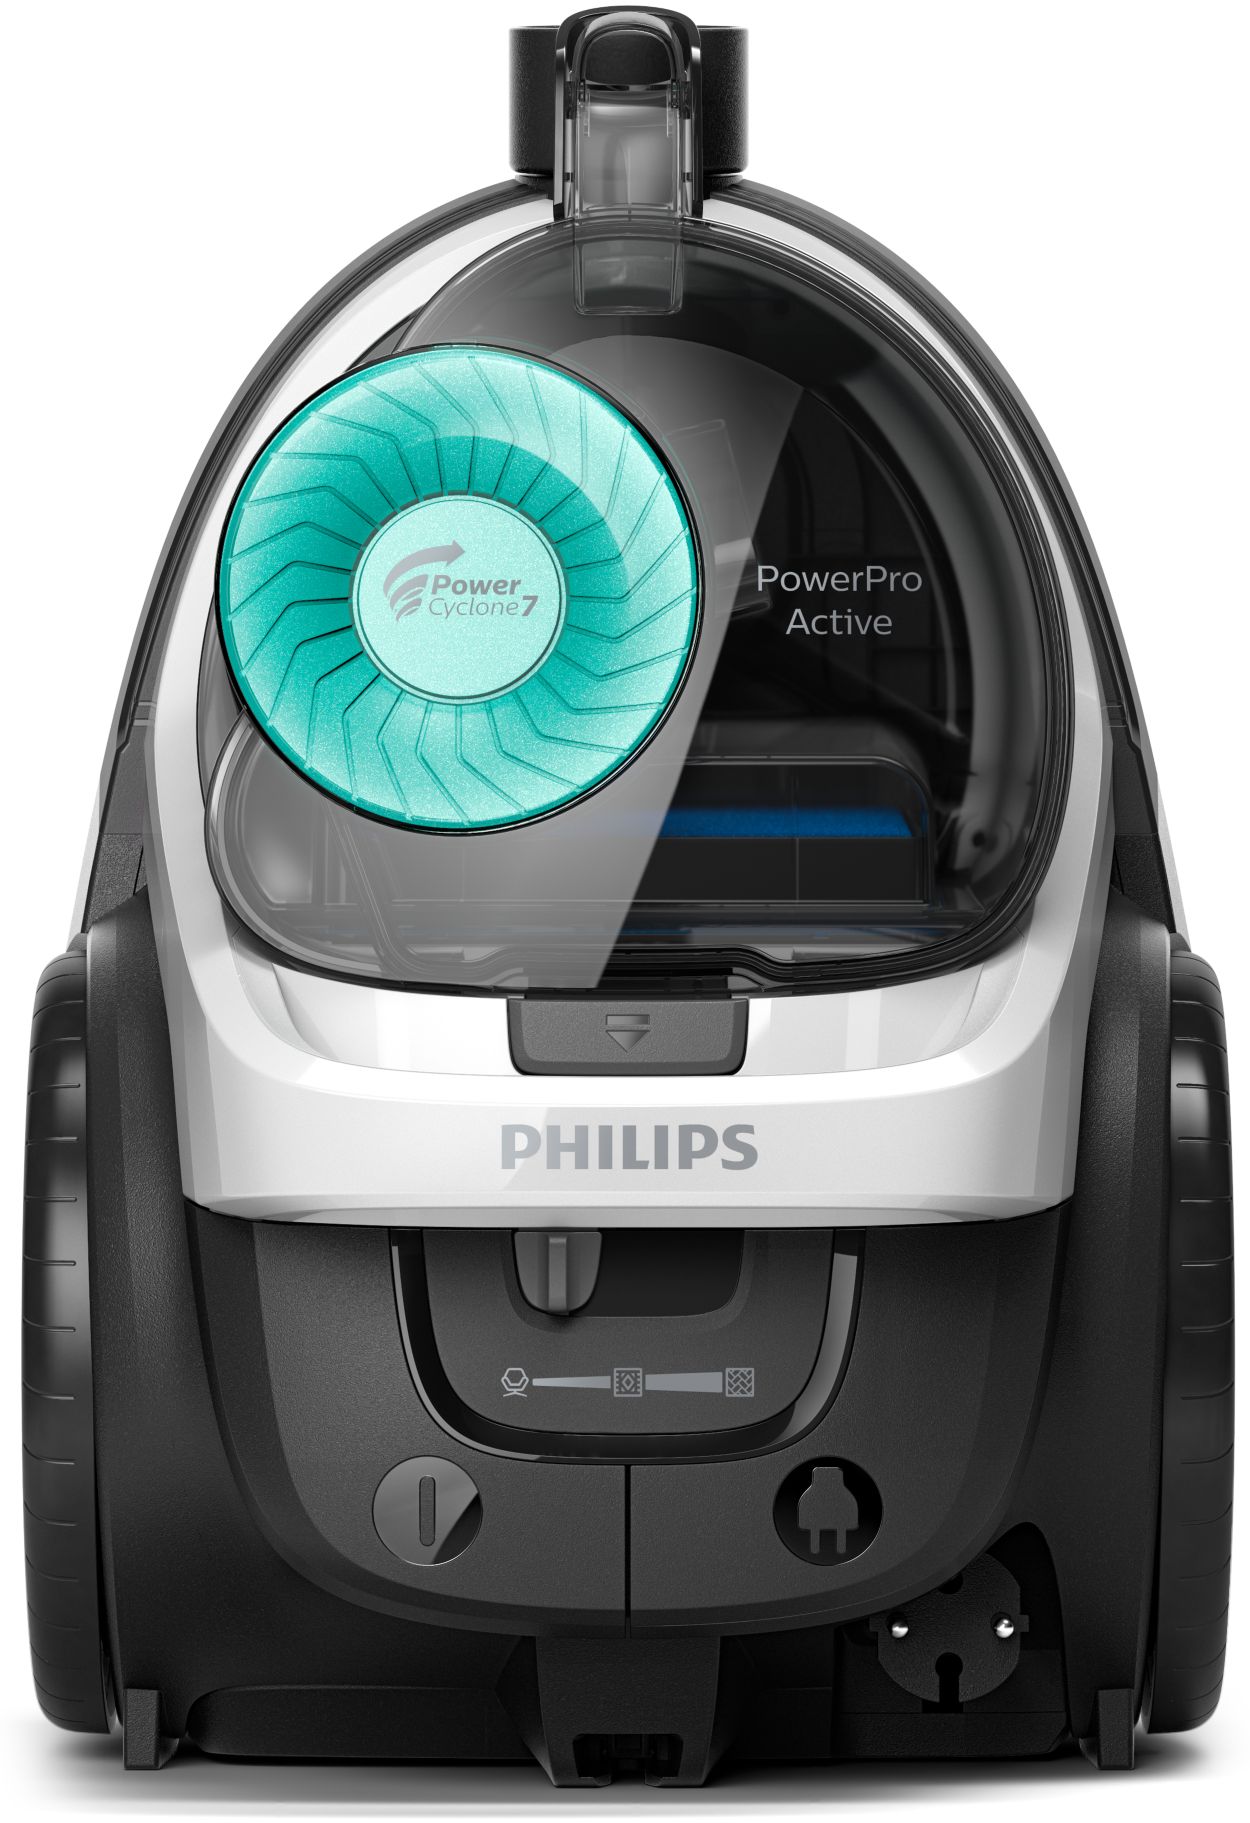 Philips powerpro купить